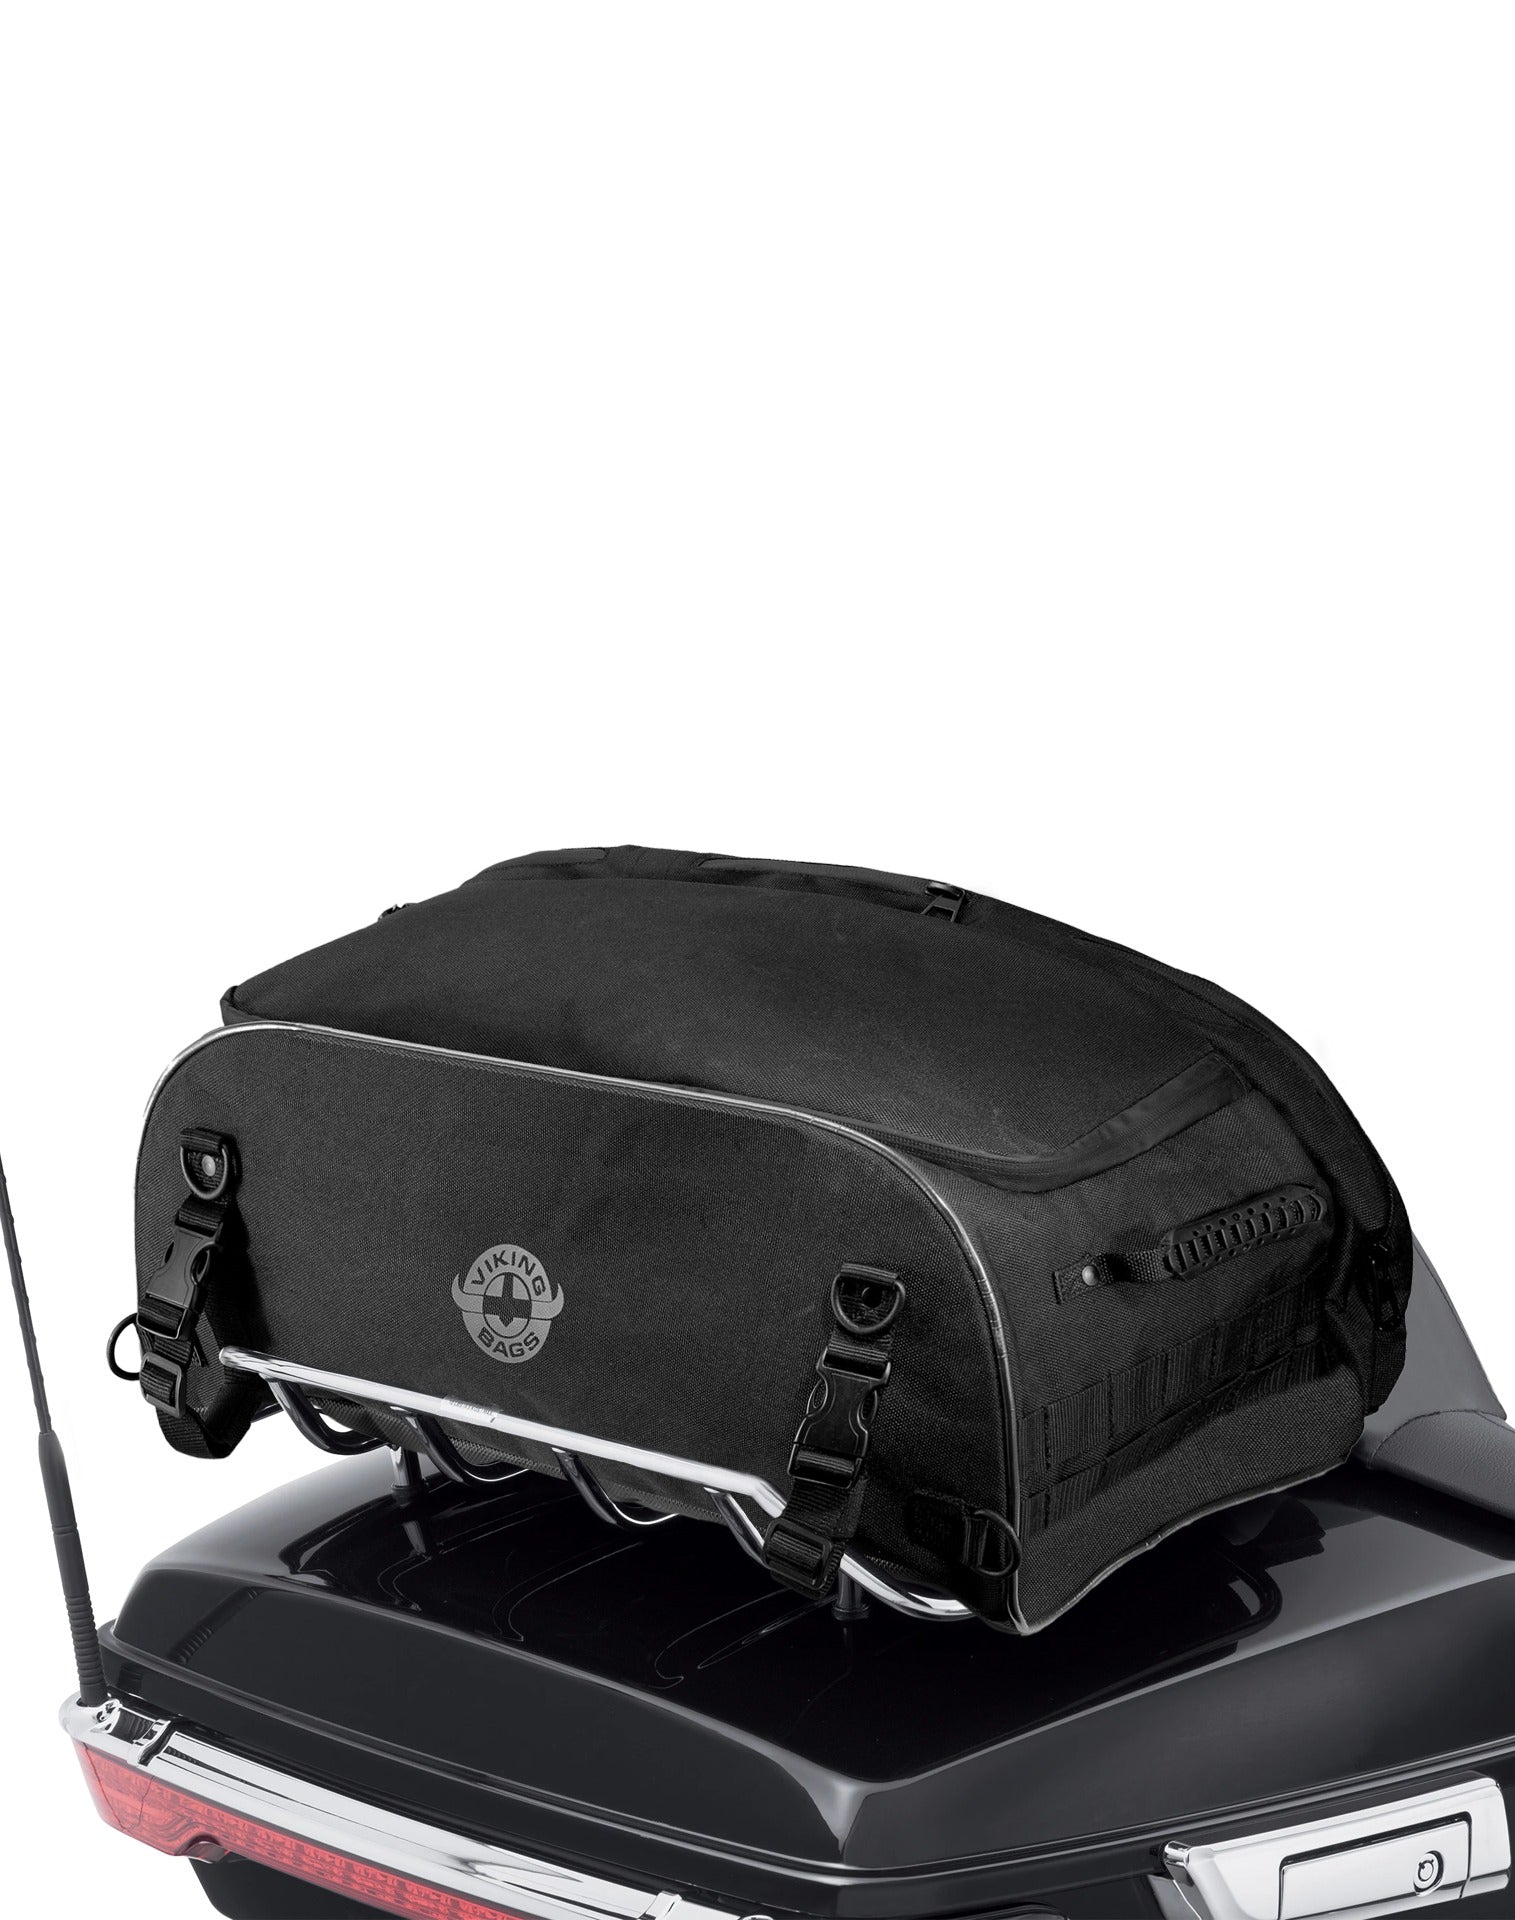 42L - Voyage Collapsible XL Motorcycle Luggage Rack Bag for Harley Davidson